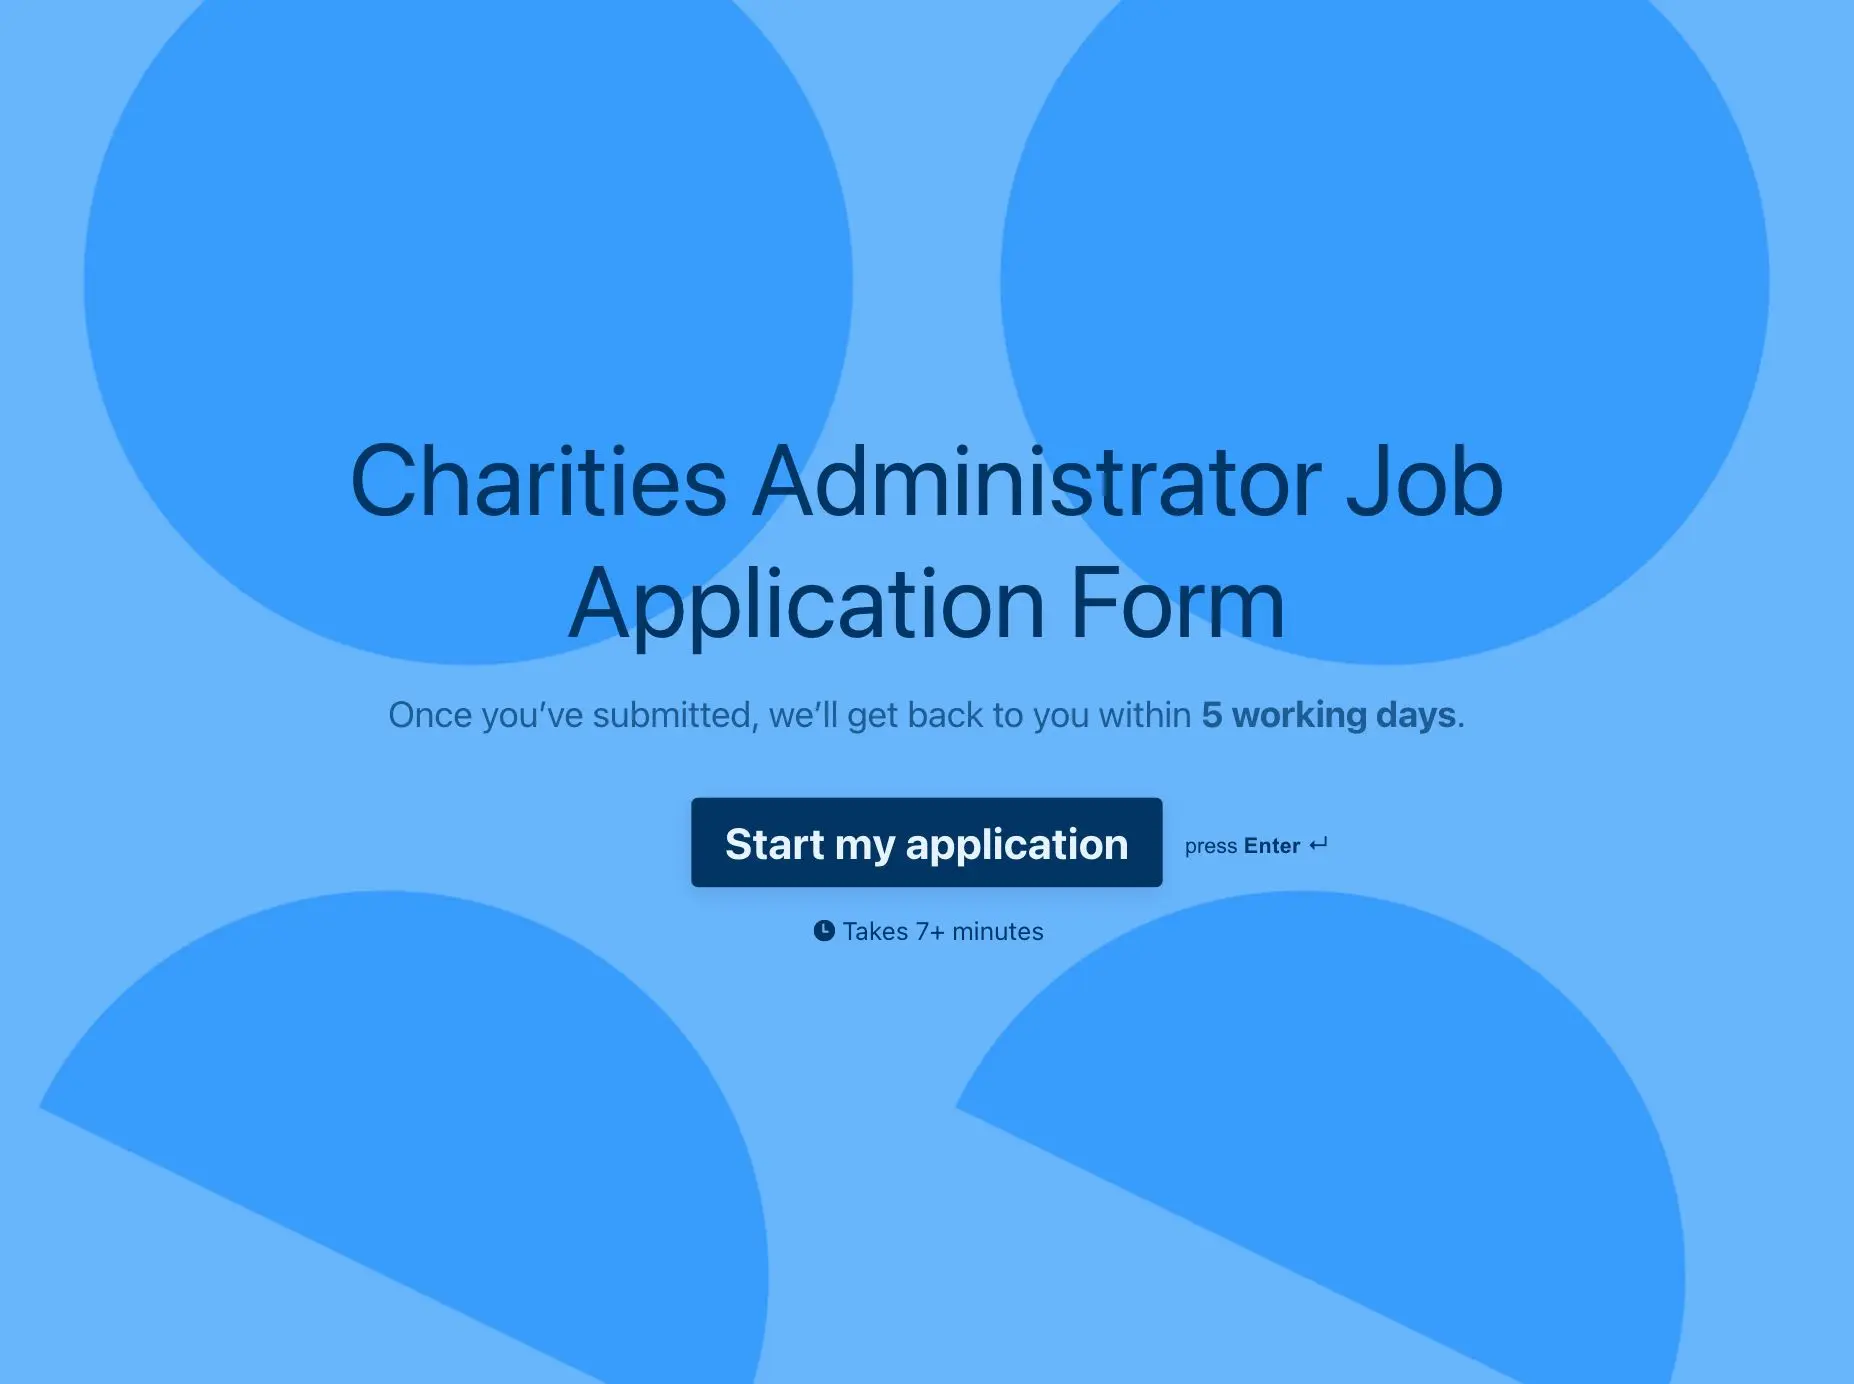 Charities Administrator Job Application Form Template Hero